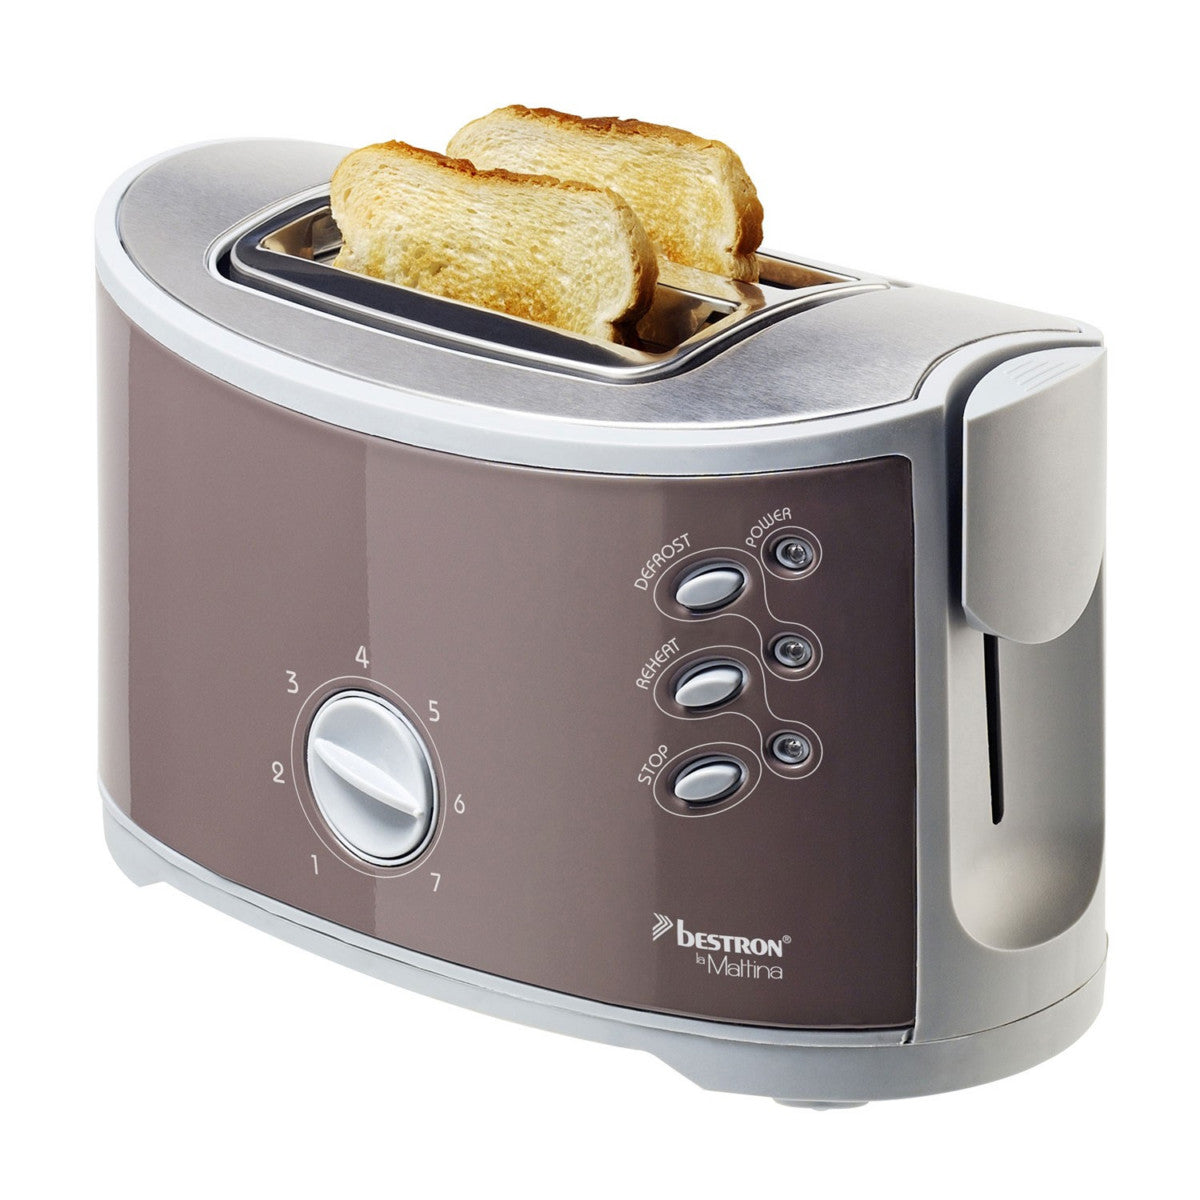 BESTRON Toaster La Mattina DTS1000LM Brown